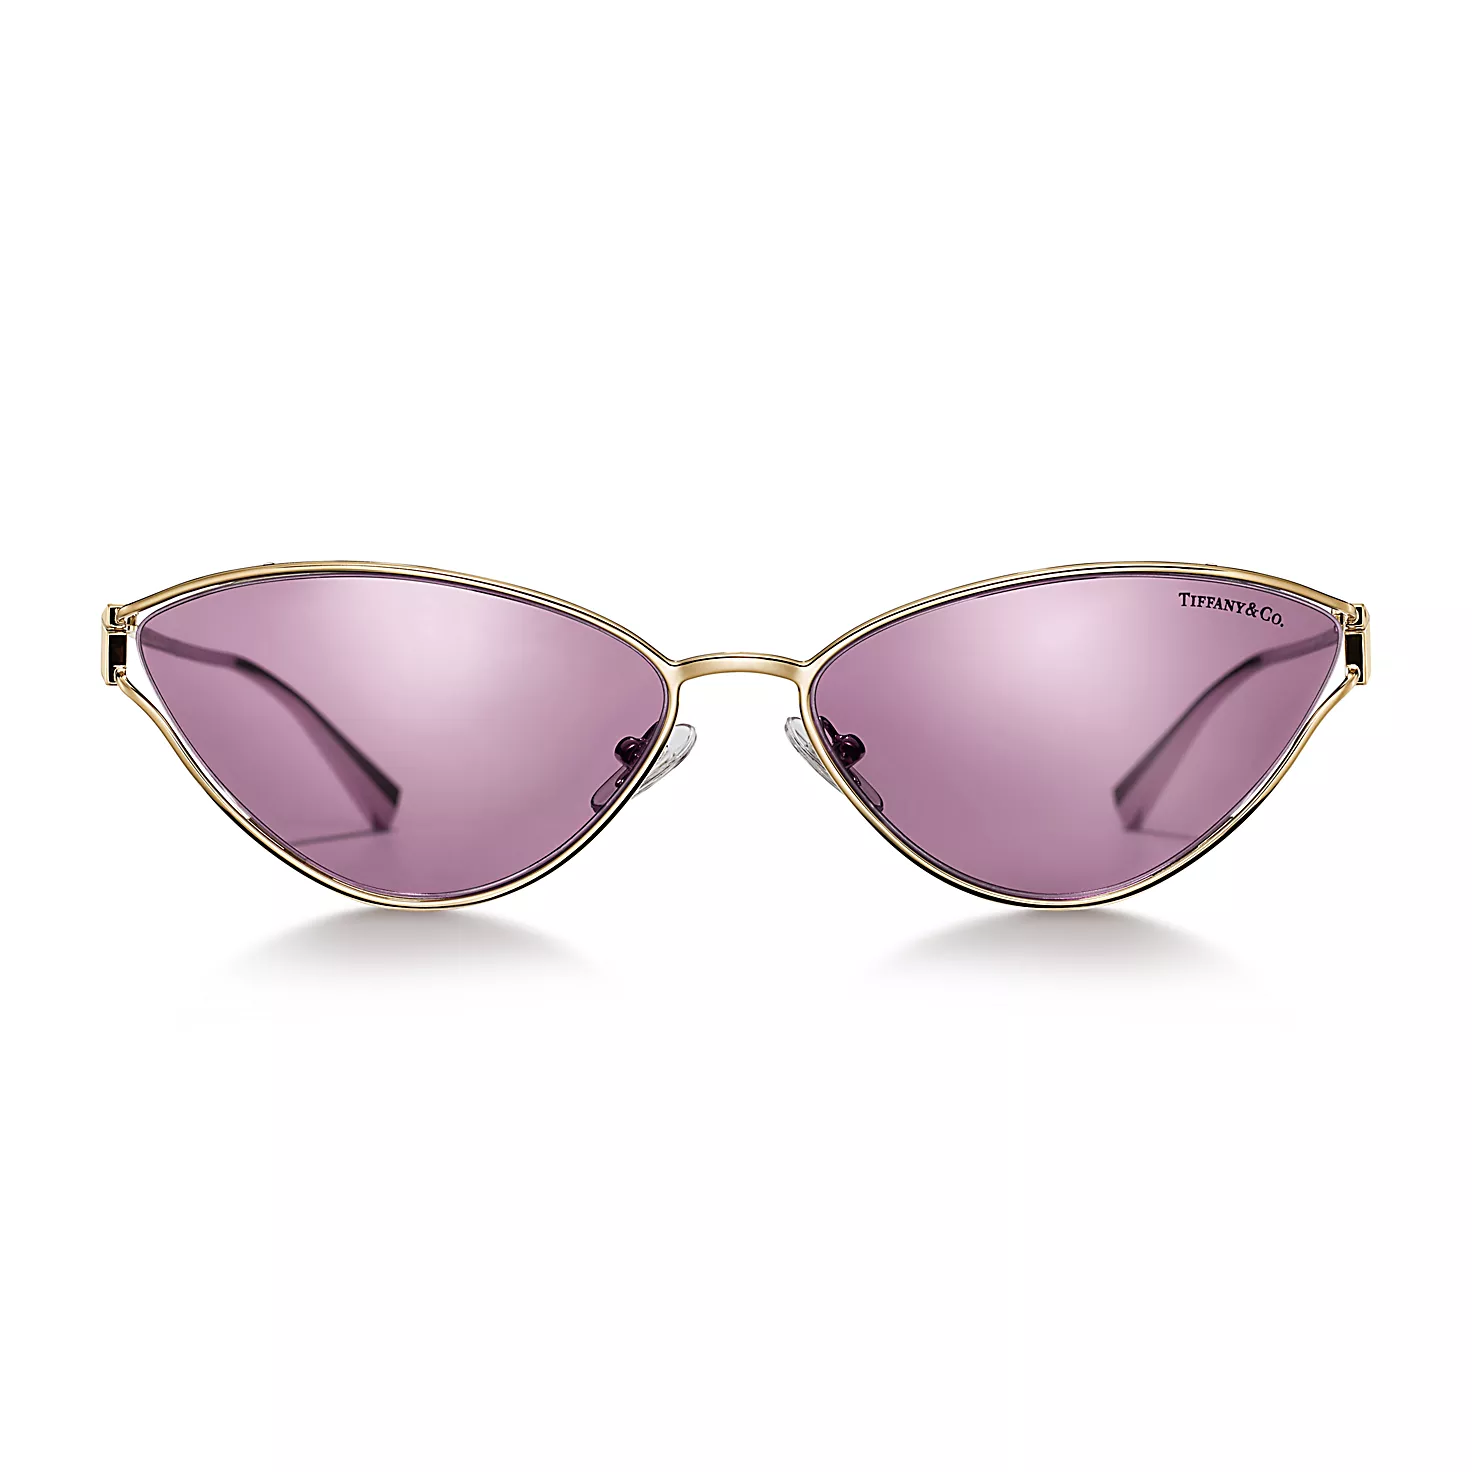 Tiffany T:선글라스, 페일 골드 컬러 메탈, 바이올렛 미러 렌즈 세팅 이미지 번호 2